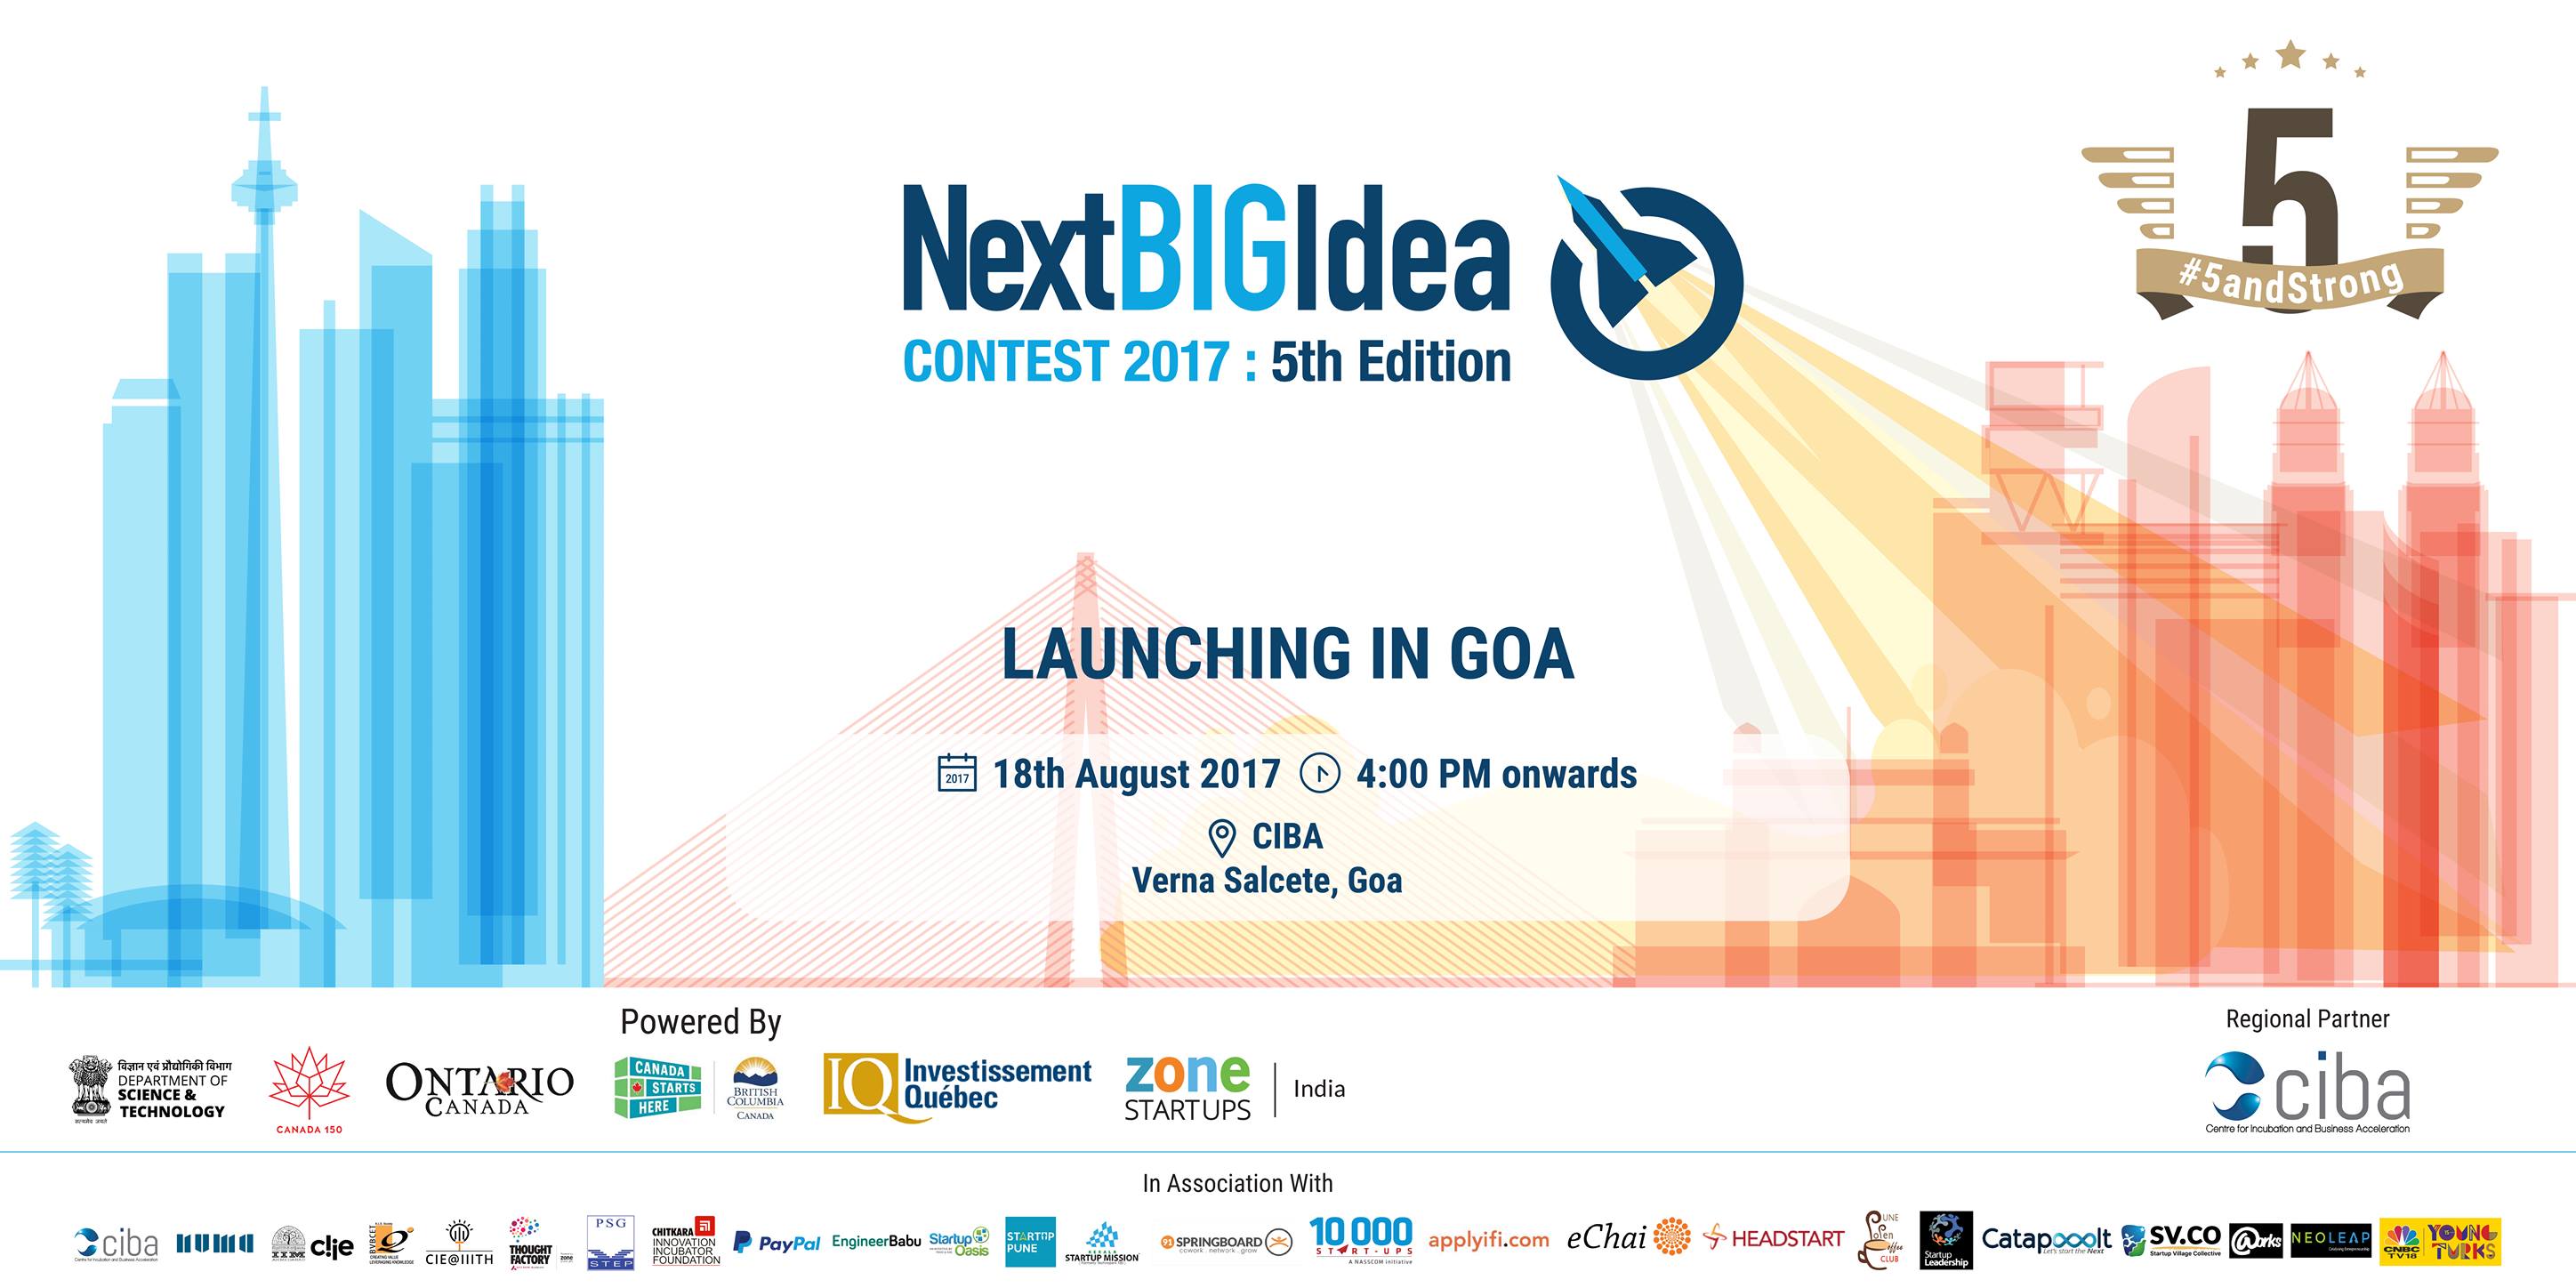 ciba-Next Big Idea Contest 2017-5th Edition